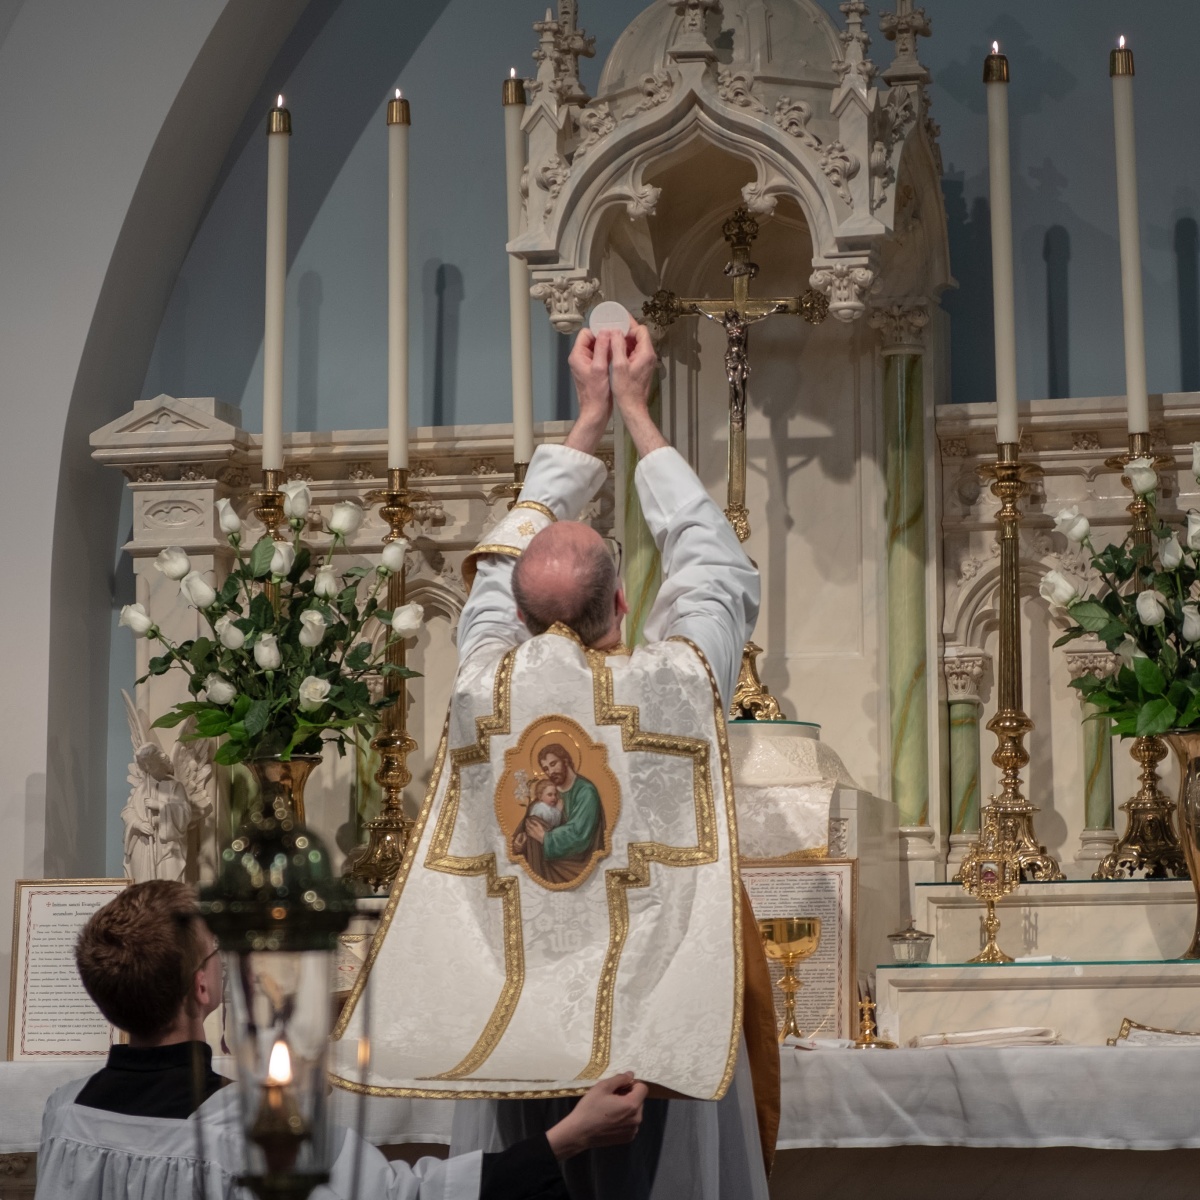 Calvary and the Mass